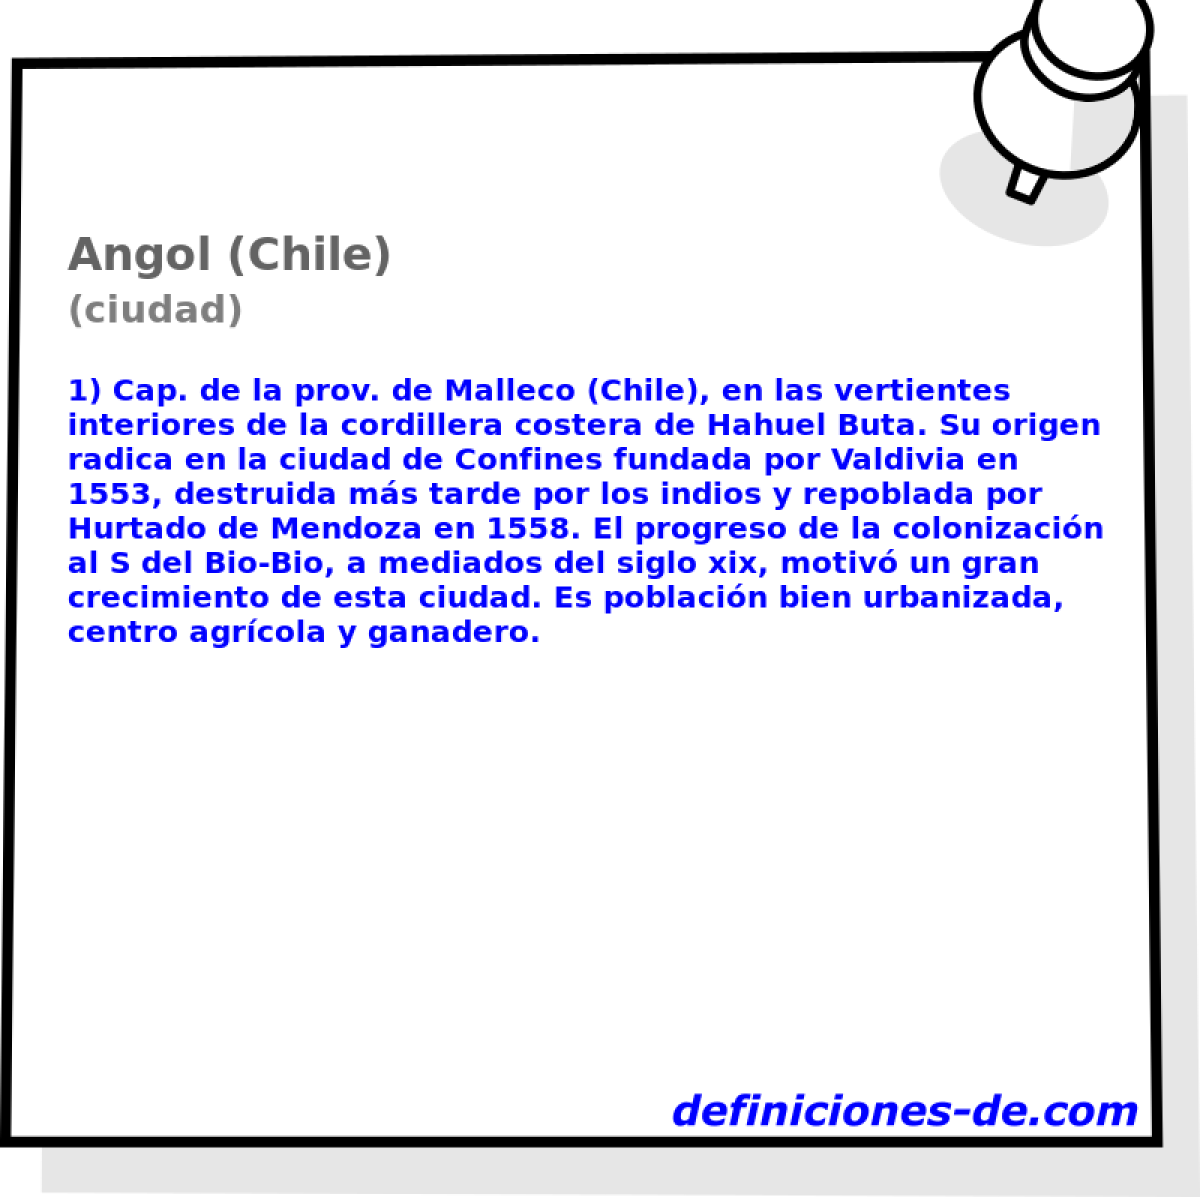 Angol (Chile) (ciudad)